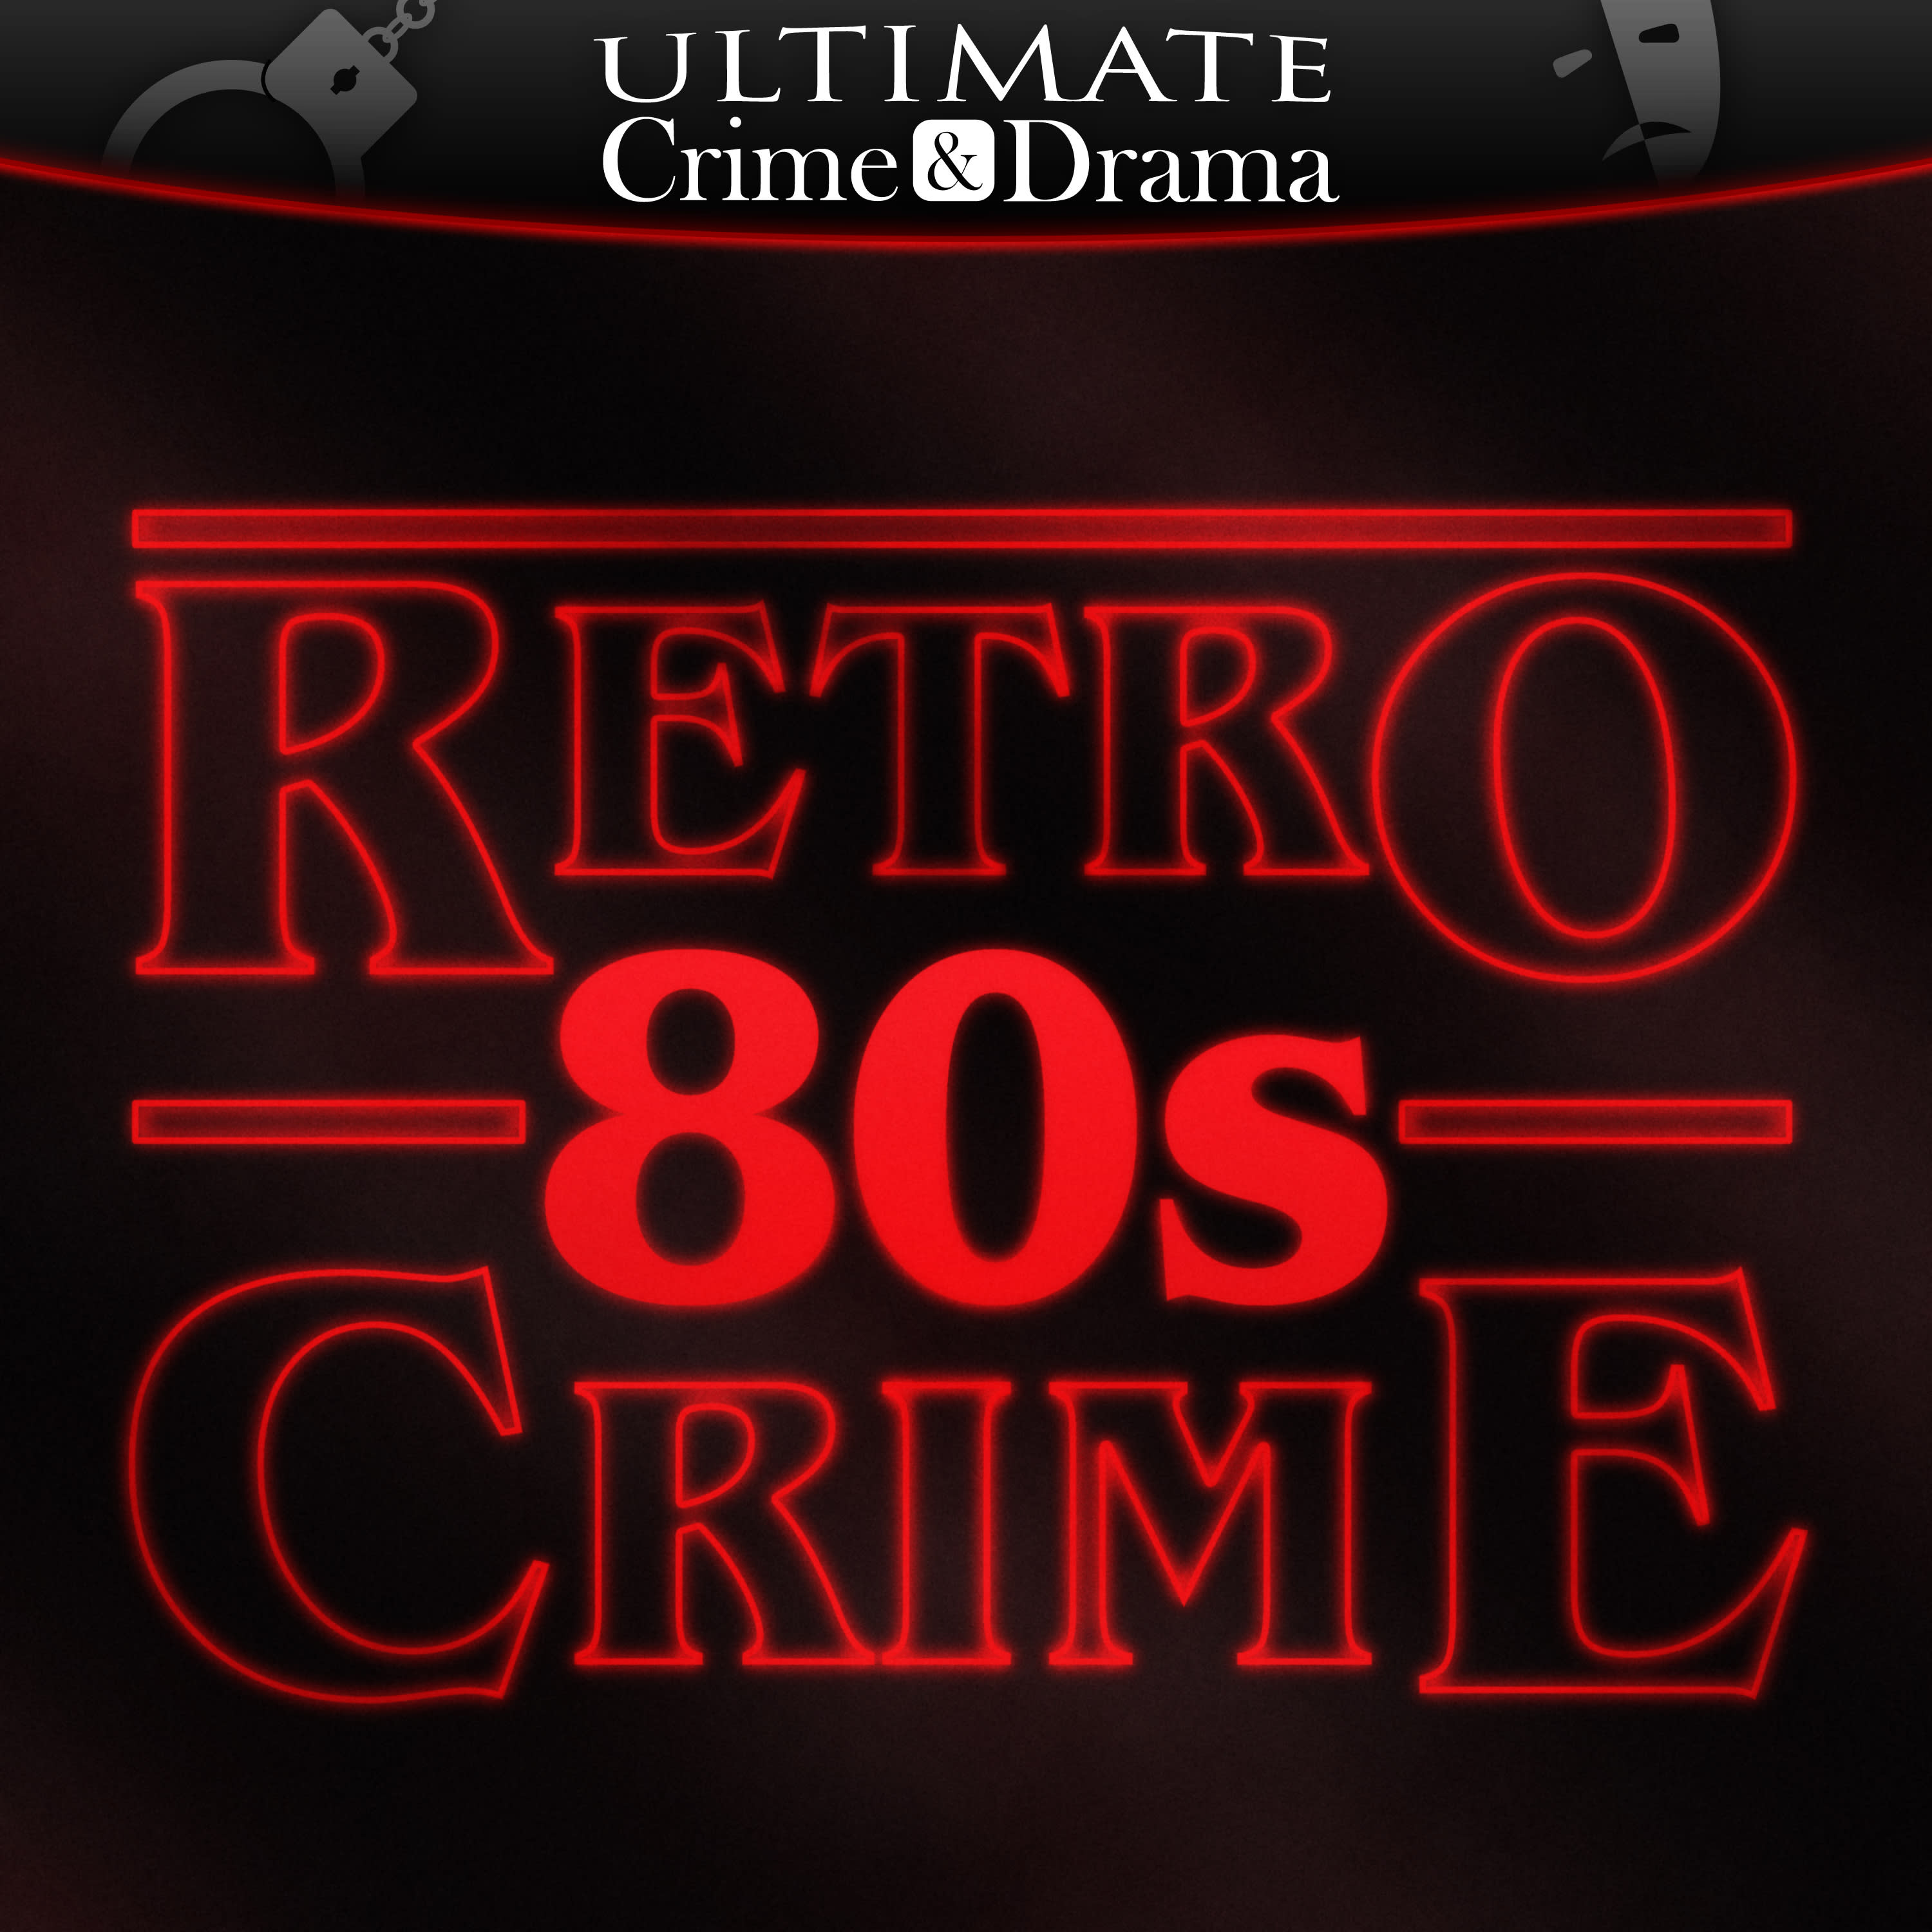 Kitschy 80s Crime Strings